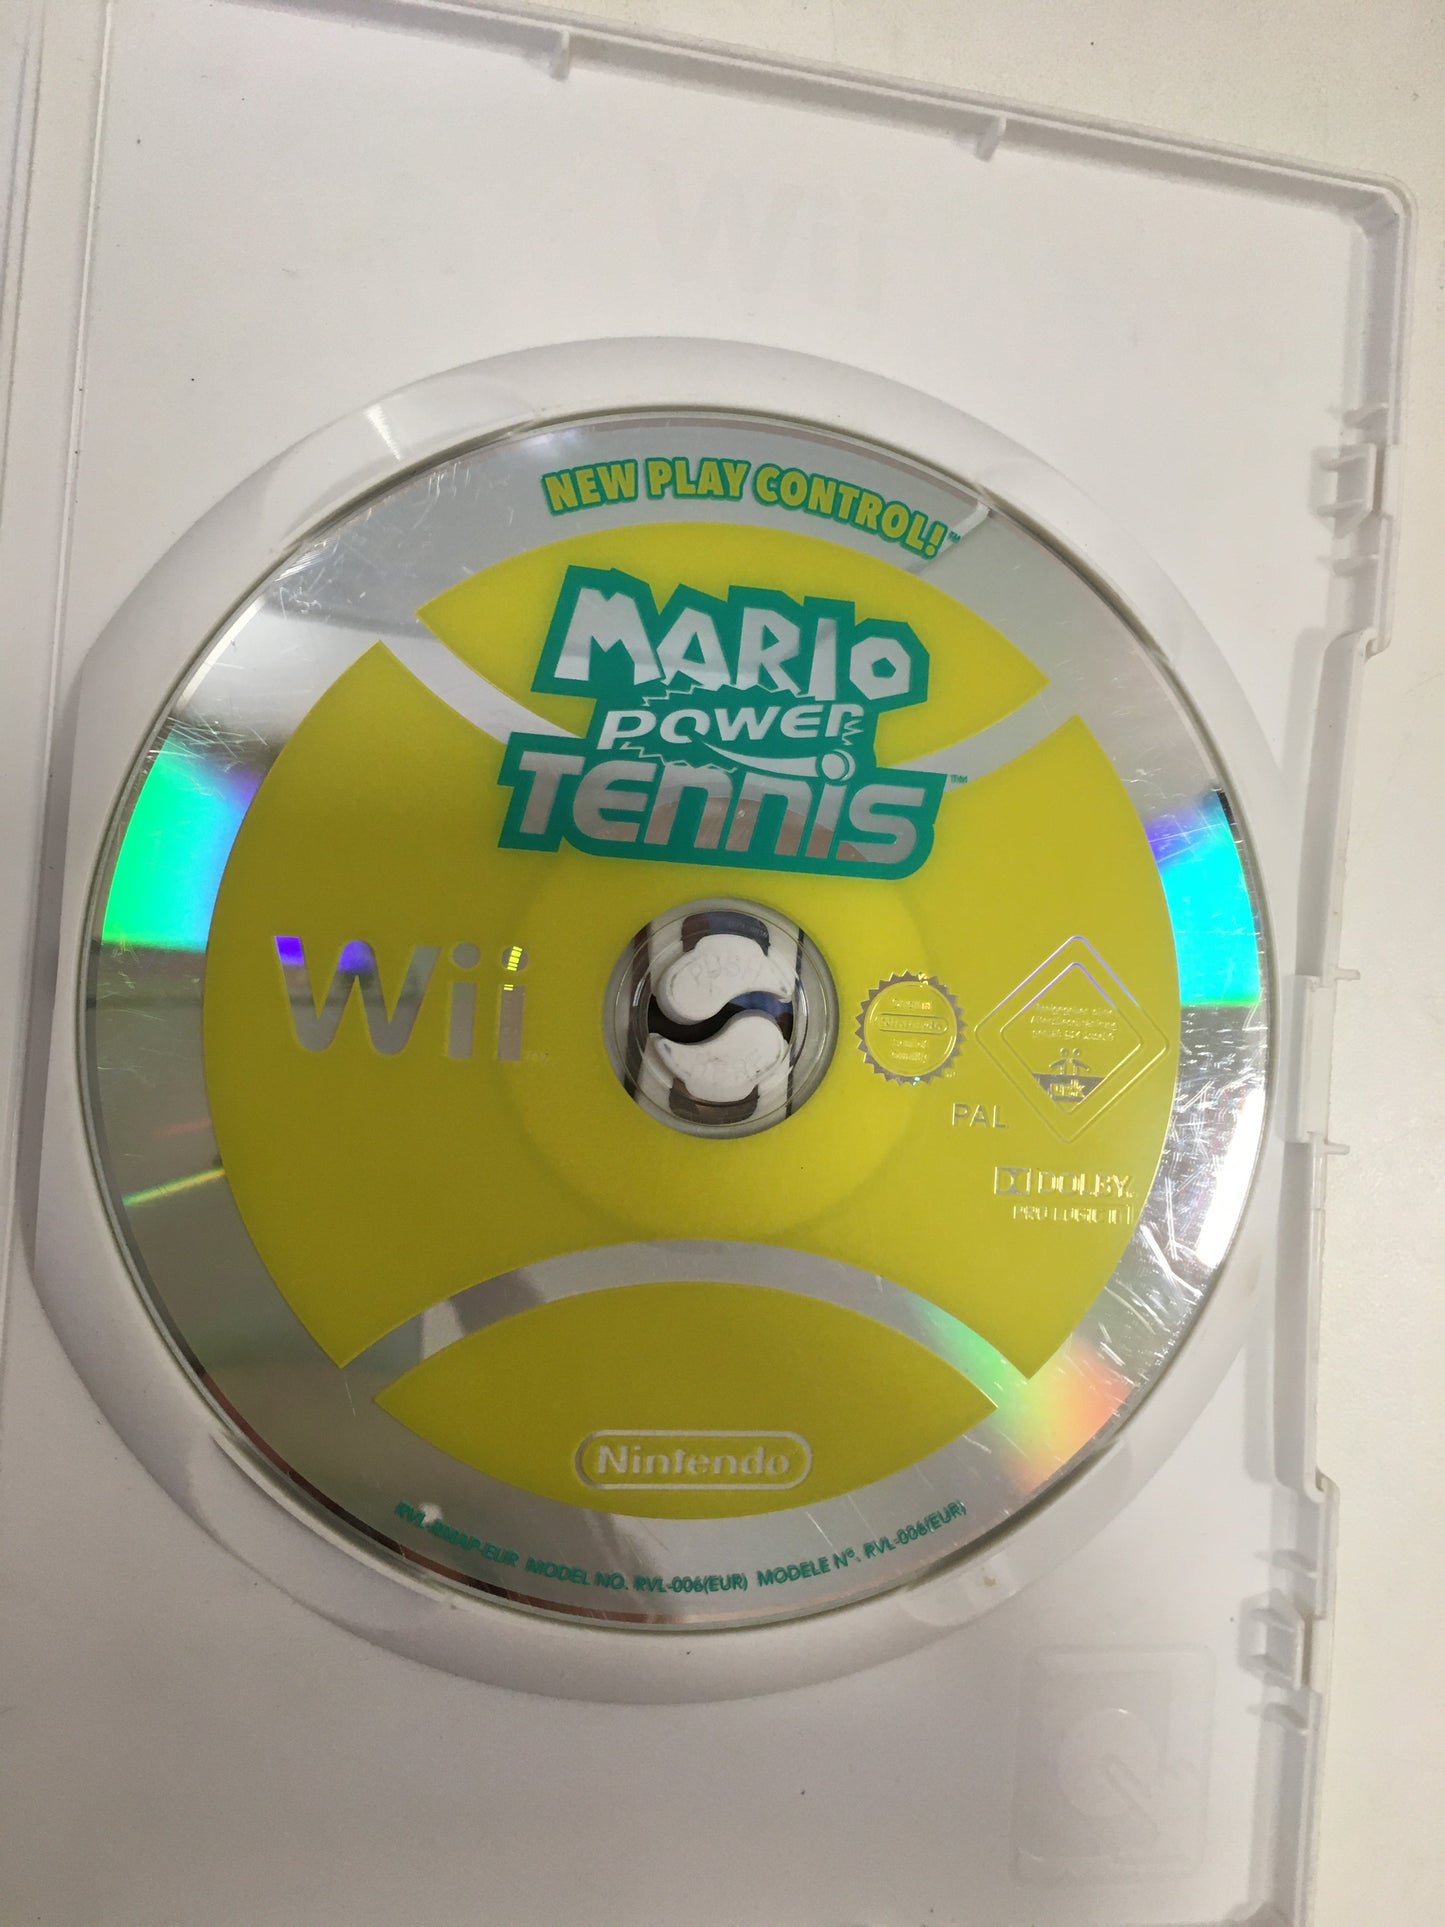 Mario power tennis Nintendo wii avec notice